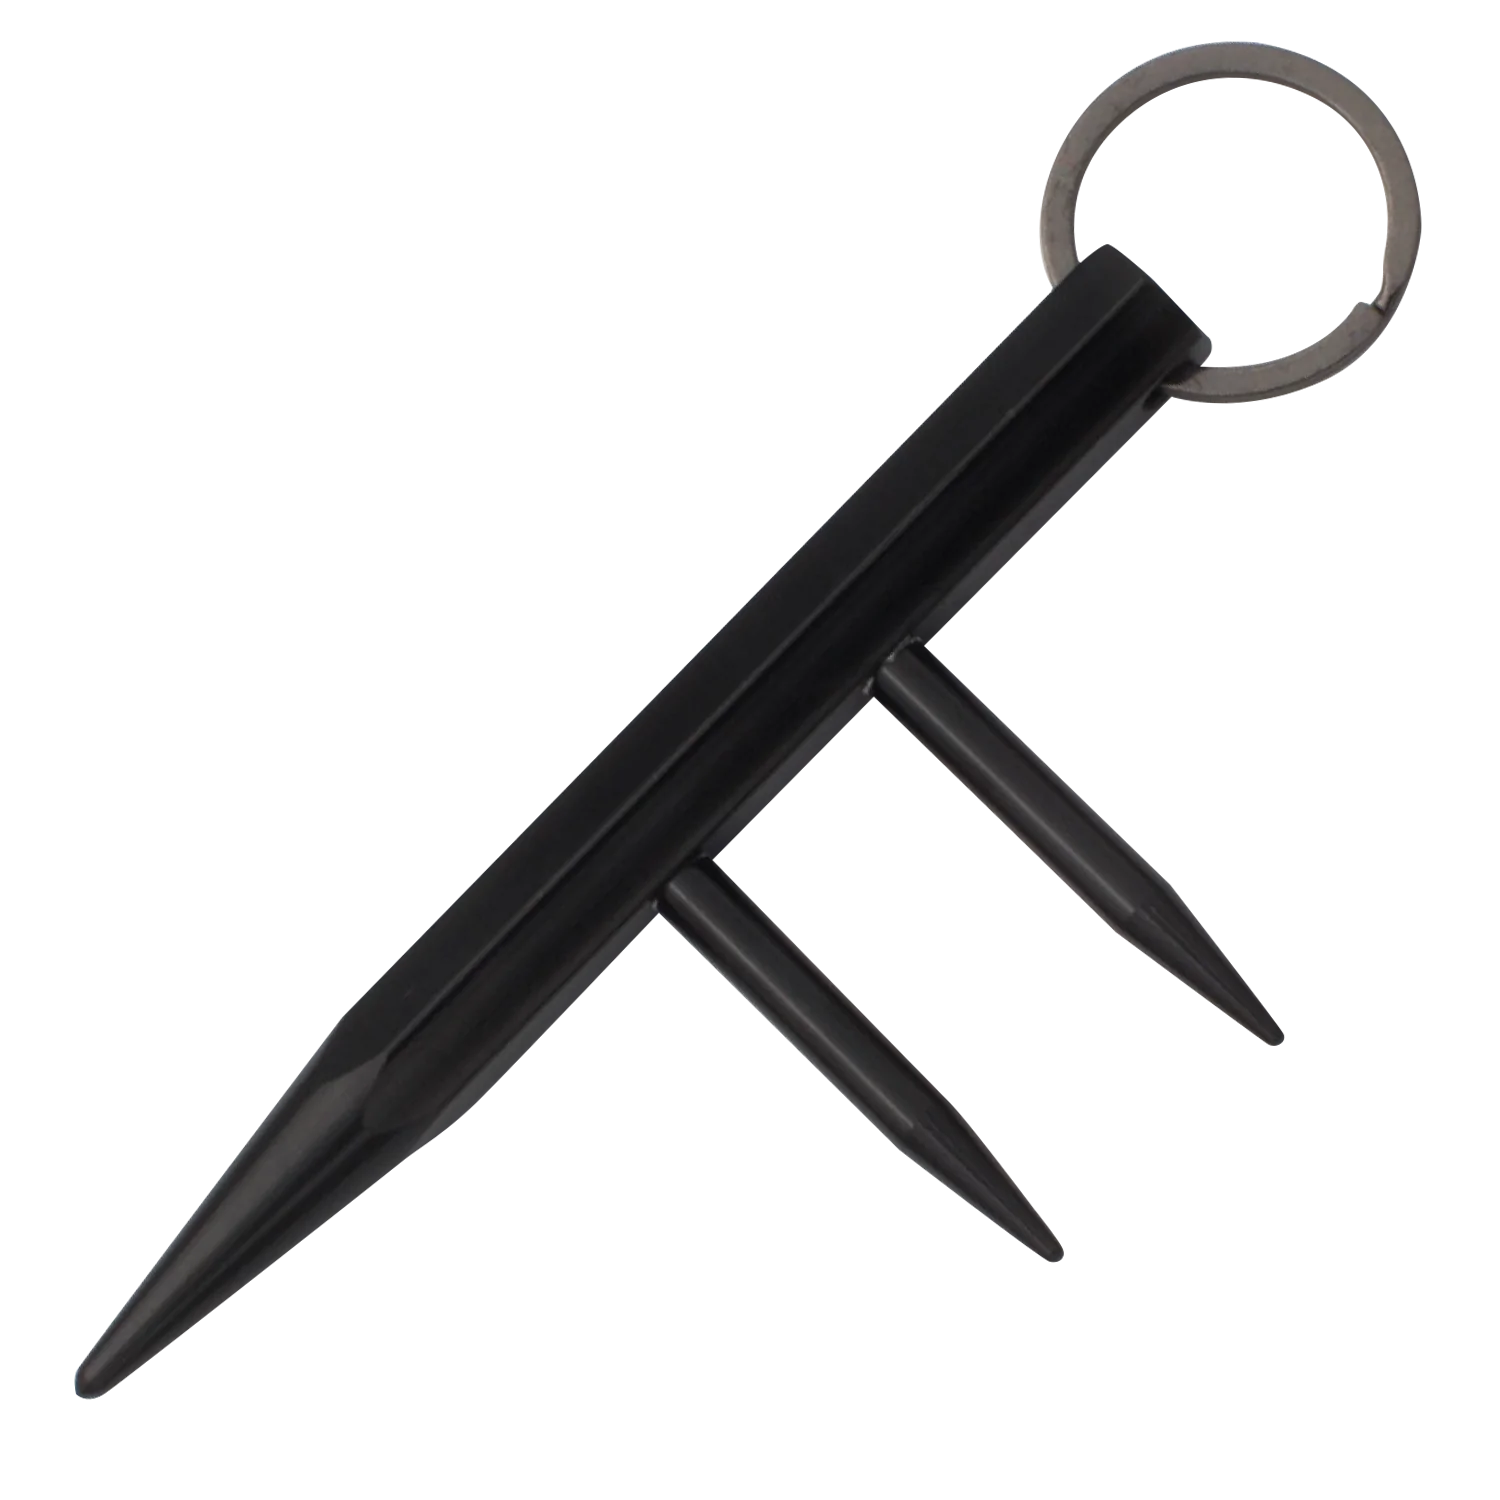 Kubotan Keychain Hidden Knife